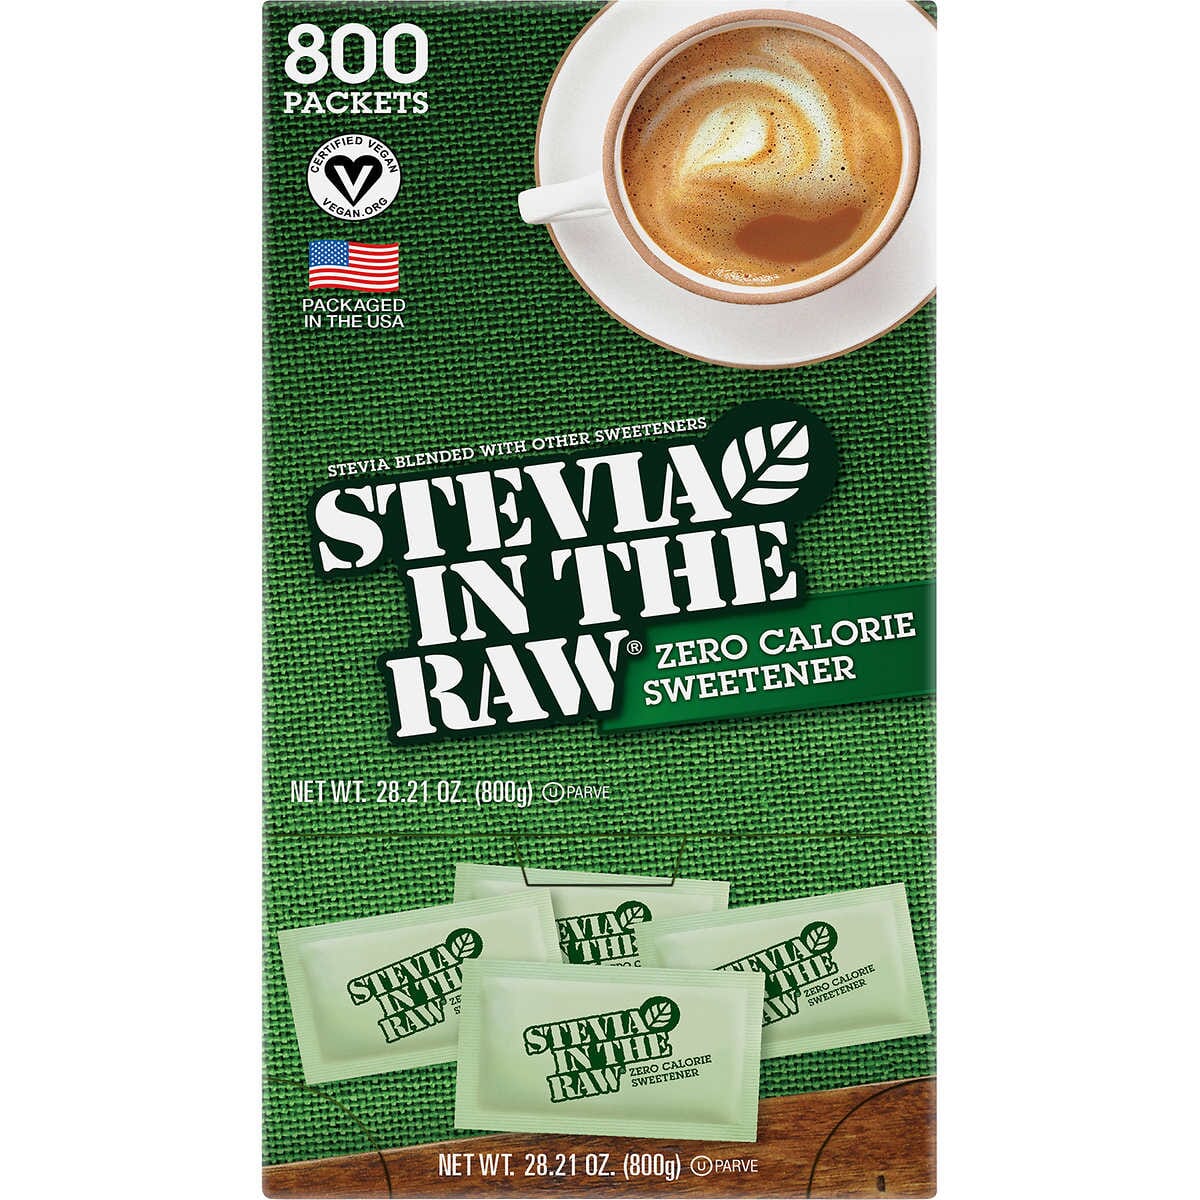 Stevia in the Raw Zero Calorie Sweetener Portion Packets Stevia in the Raw Packets 800 Count 